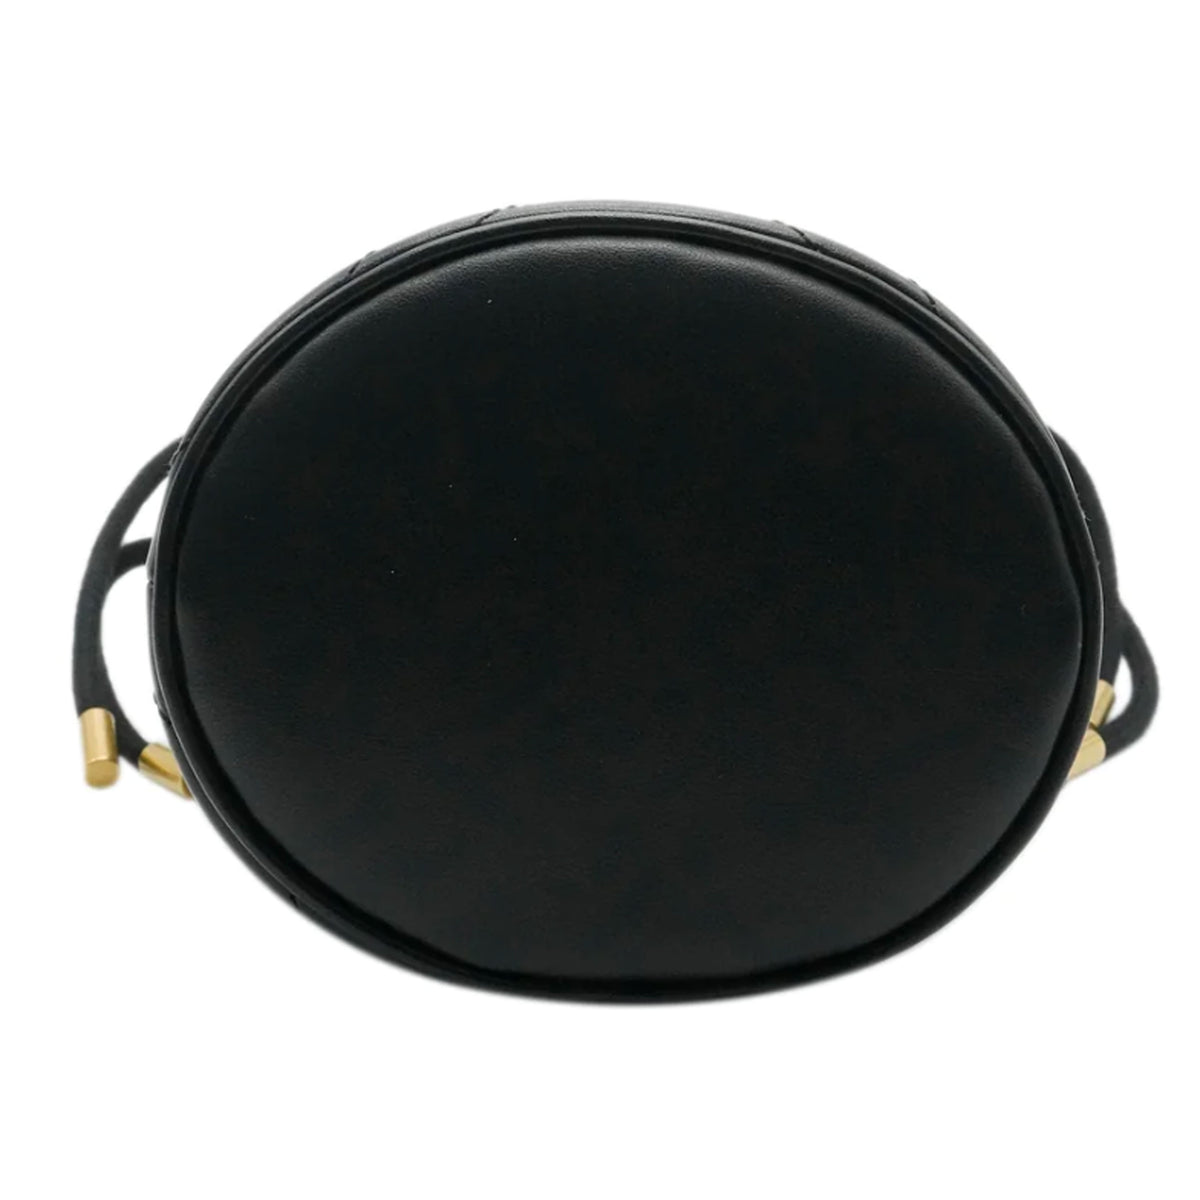 Black Calfskin Matelasse Mini GG Marmont 2.0 Bucket Bag